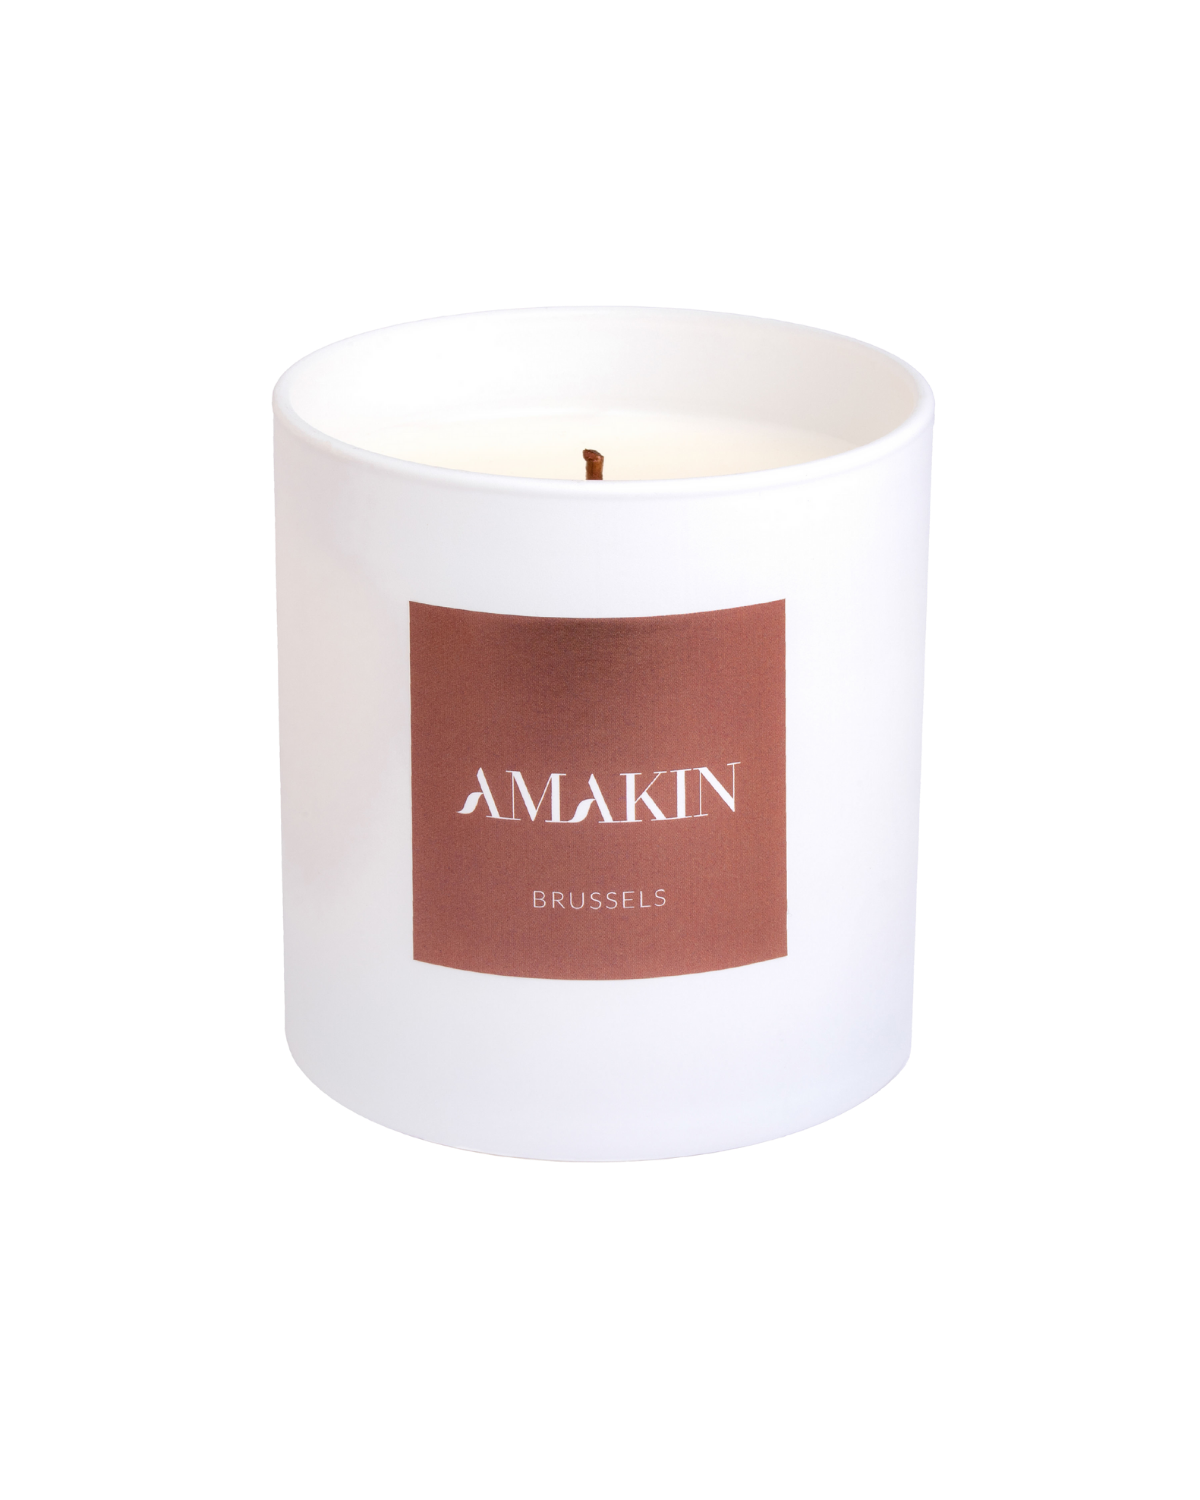 BRUSSELS Candle - PRE ORDER - AmakinStore